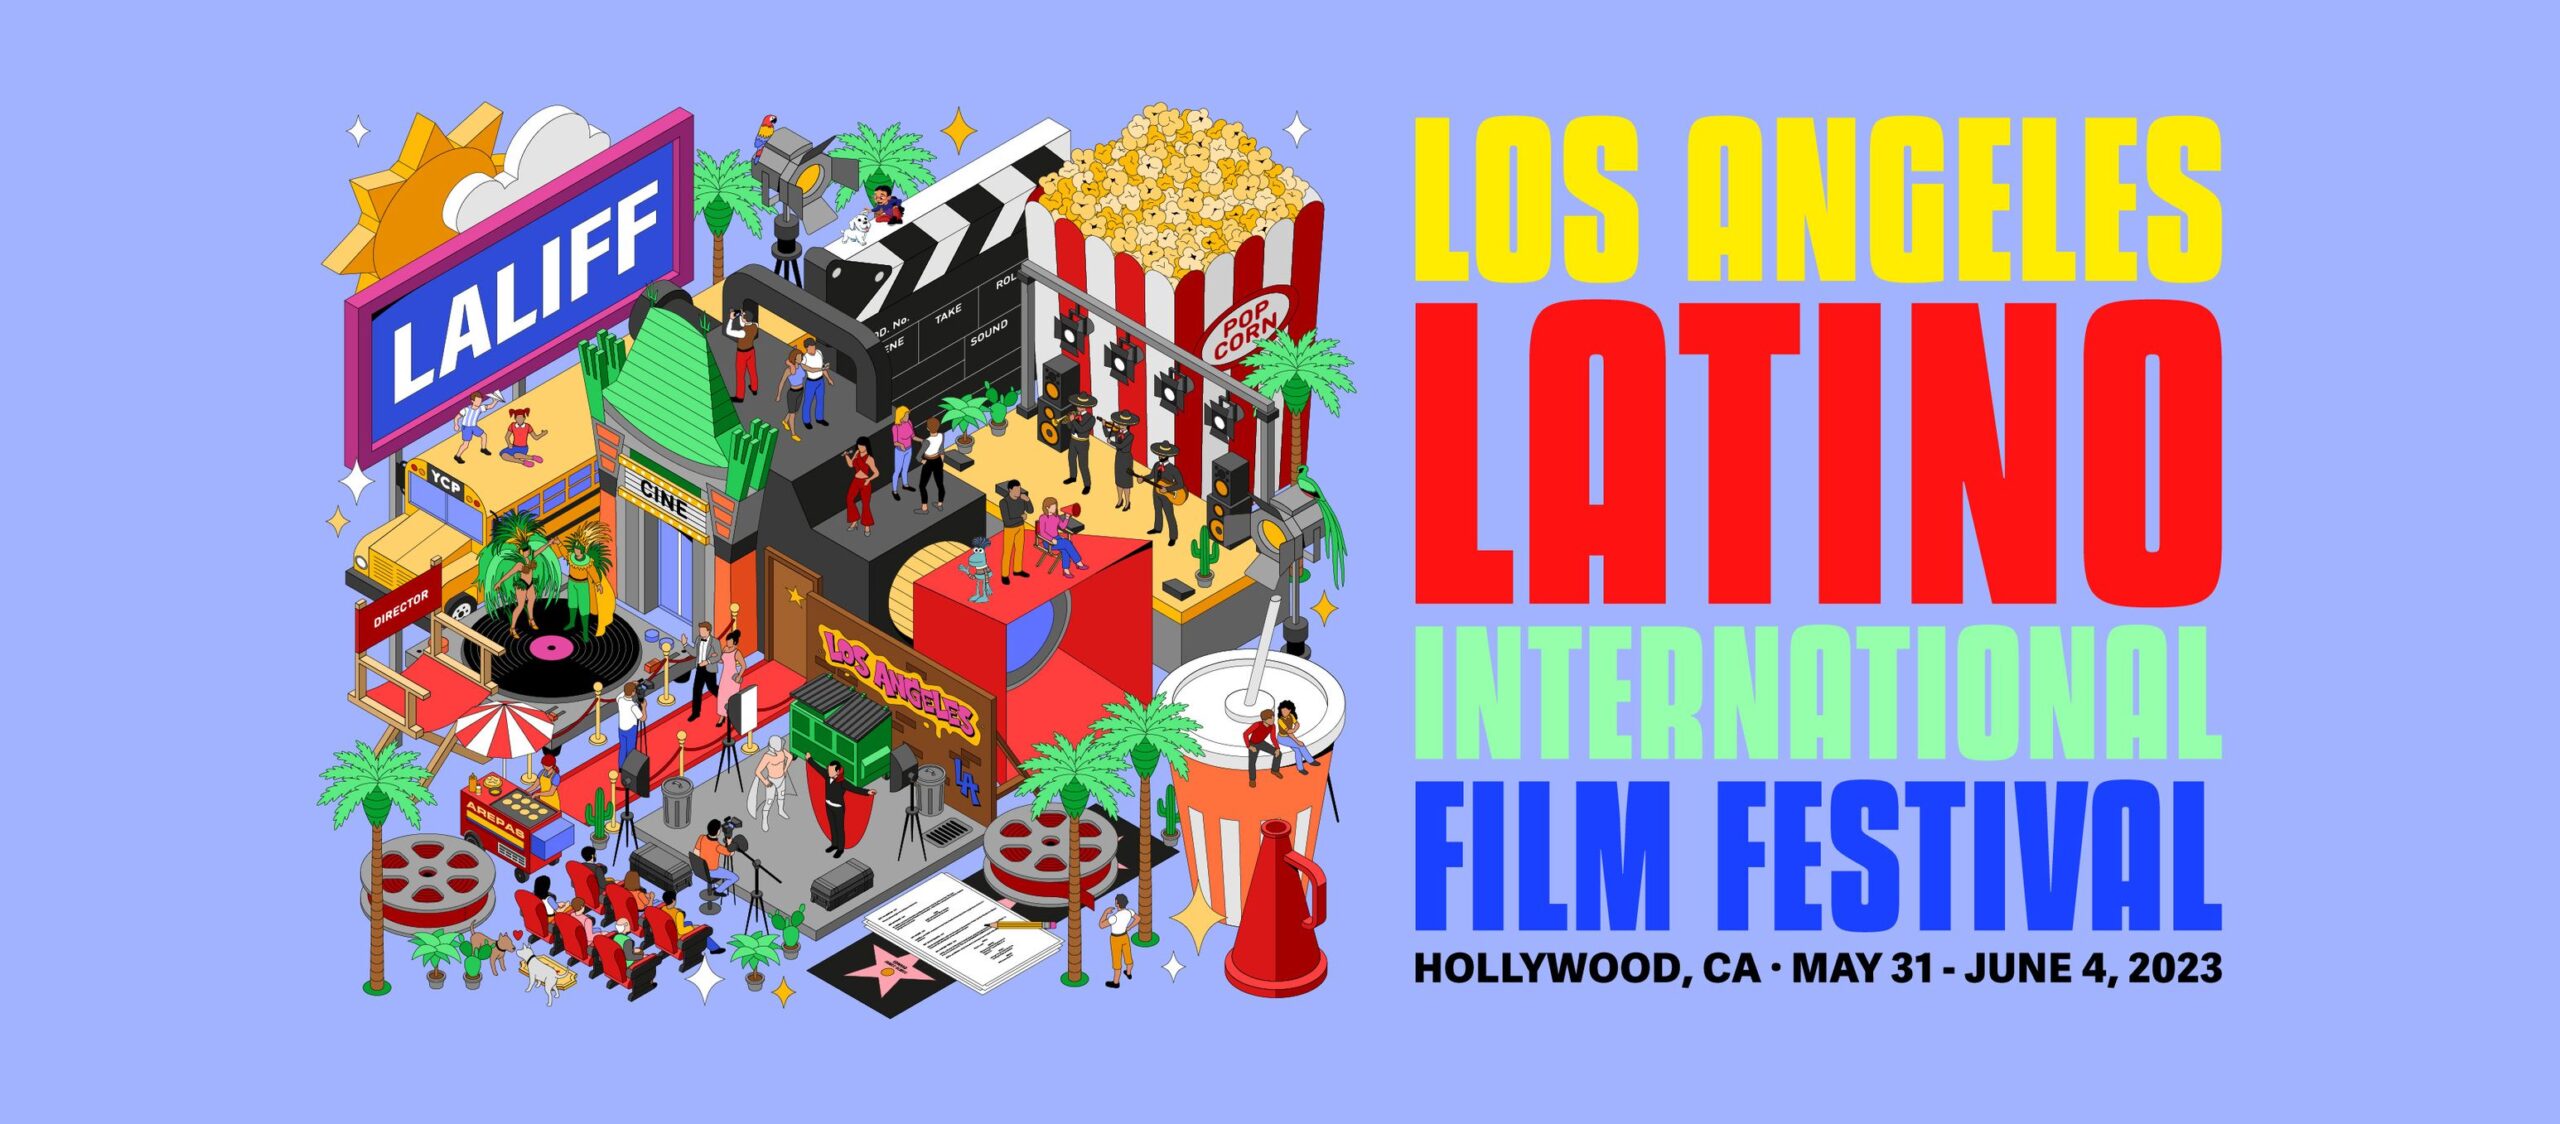 Sergio Monserrate on Los Angeles Latino International Film Festival 2023 Lineup